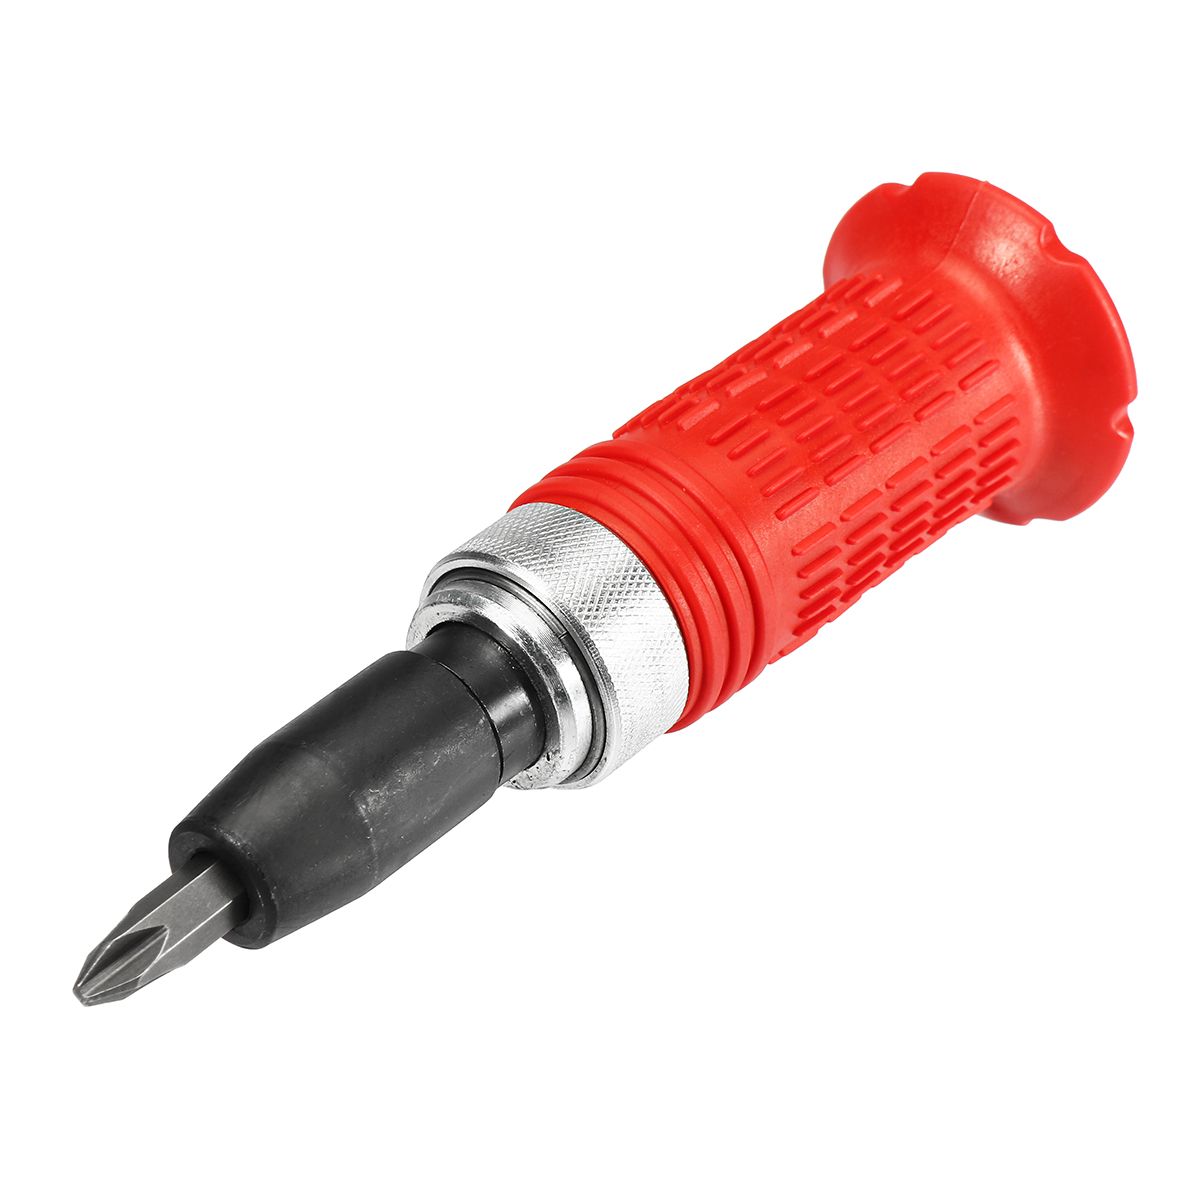 Manual-Impact-Driver-Kit-Screwdriver-14-Inch-Drive-Hammer-Screw-Socket-Drive-Tool-With-Bits-1376681